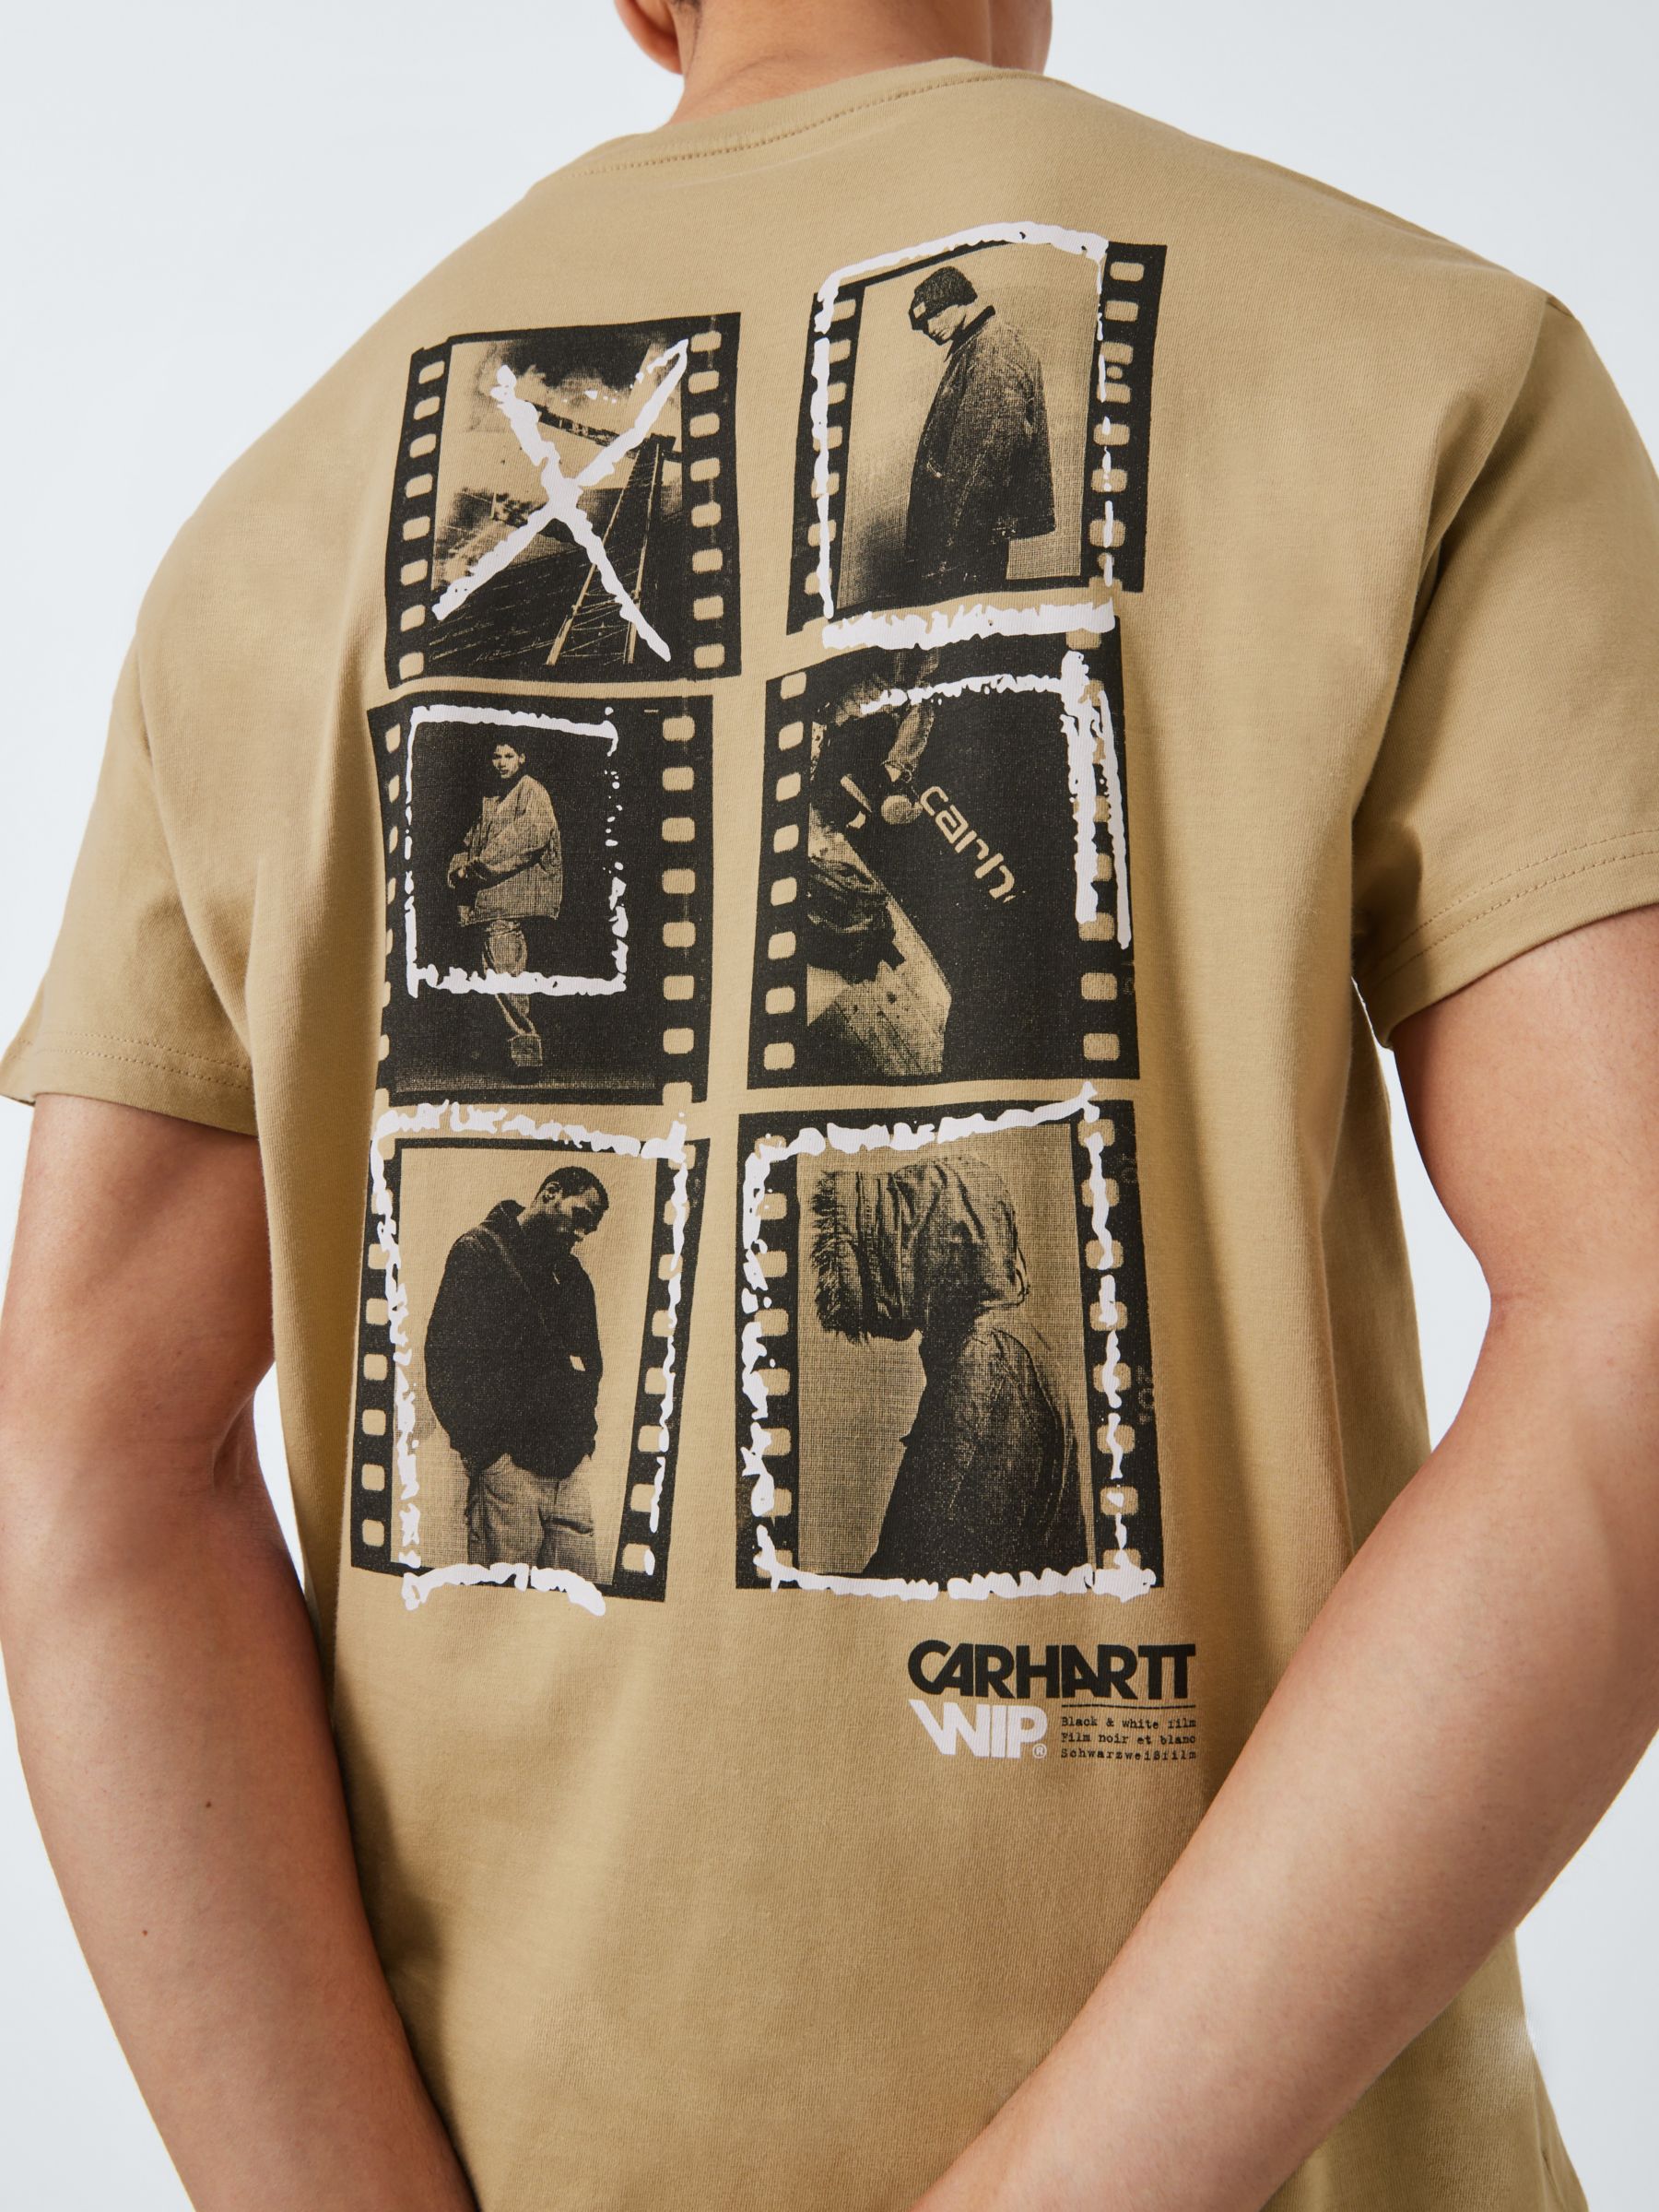 Buy Carhartt WIP Contact Organic Cotton Short Sleeve T-Shirt, Sable Online at johnlewis.com